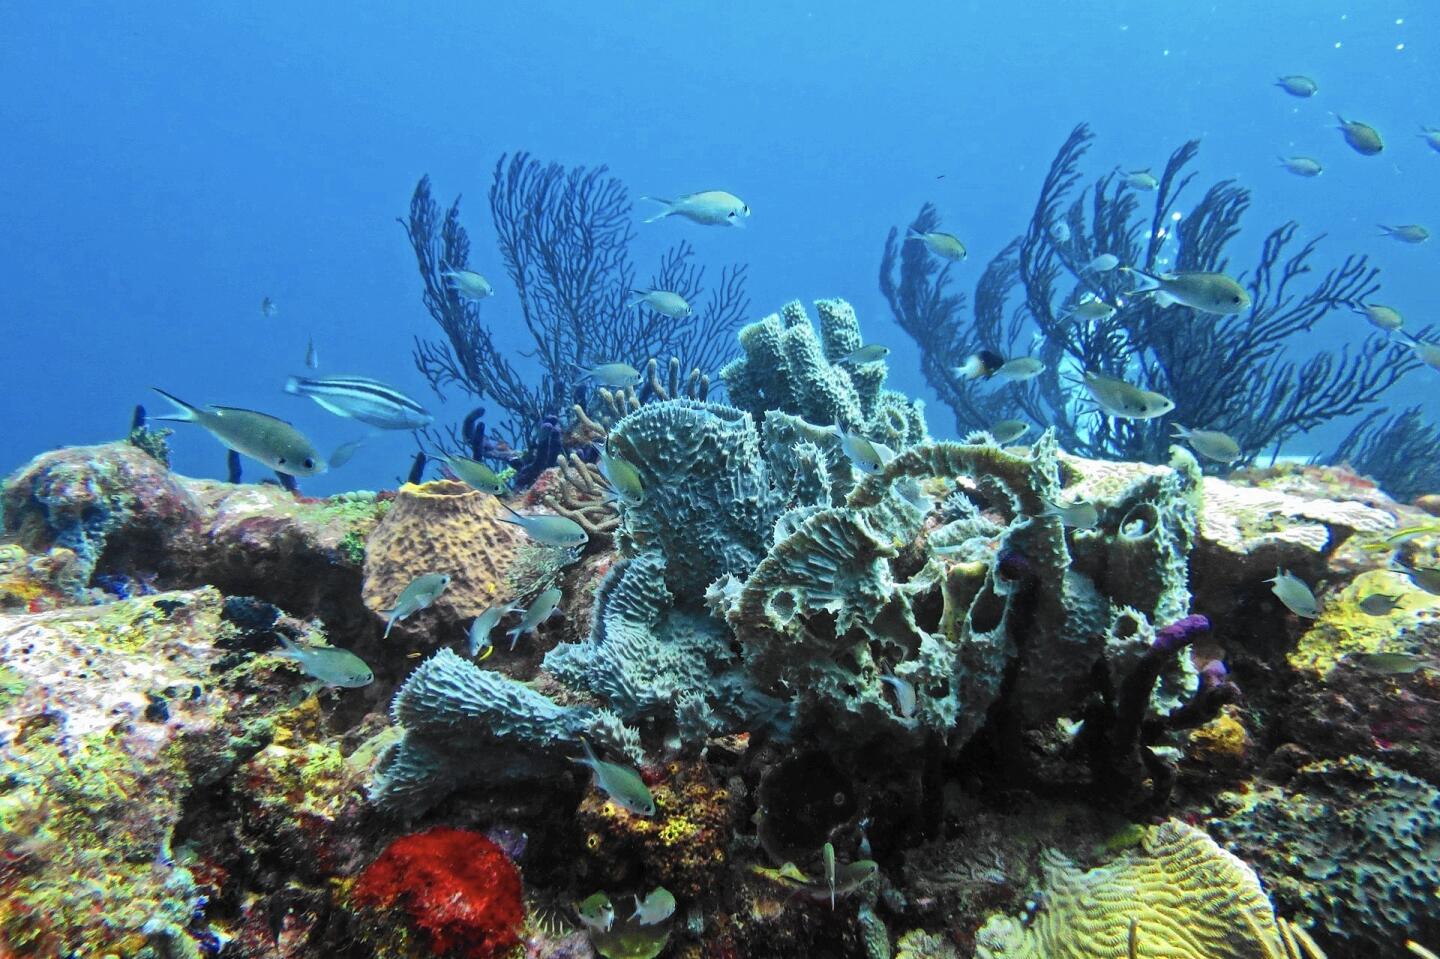 ct-cth-travel-saint-vincent-4-coral-marine-life-b-20160411